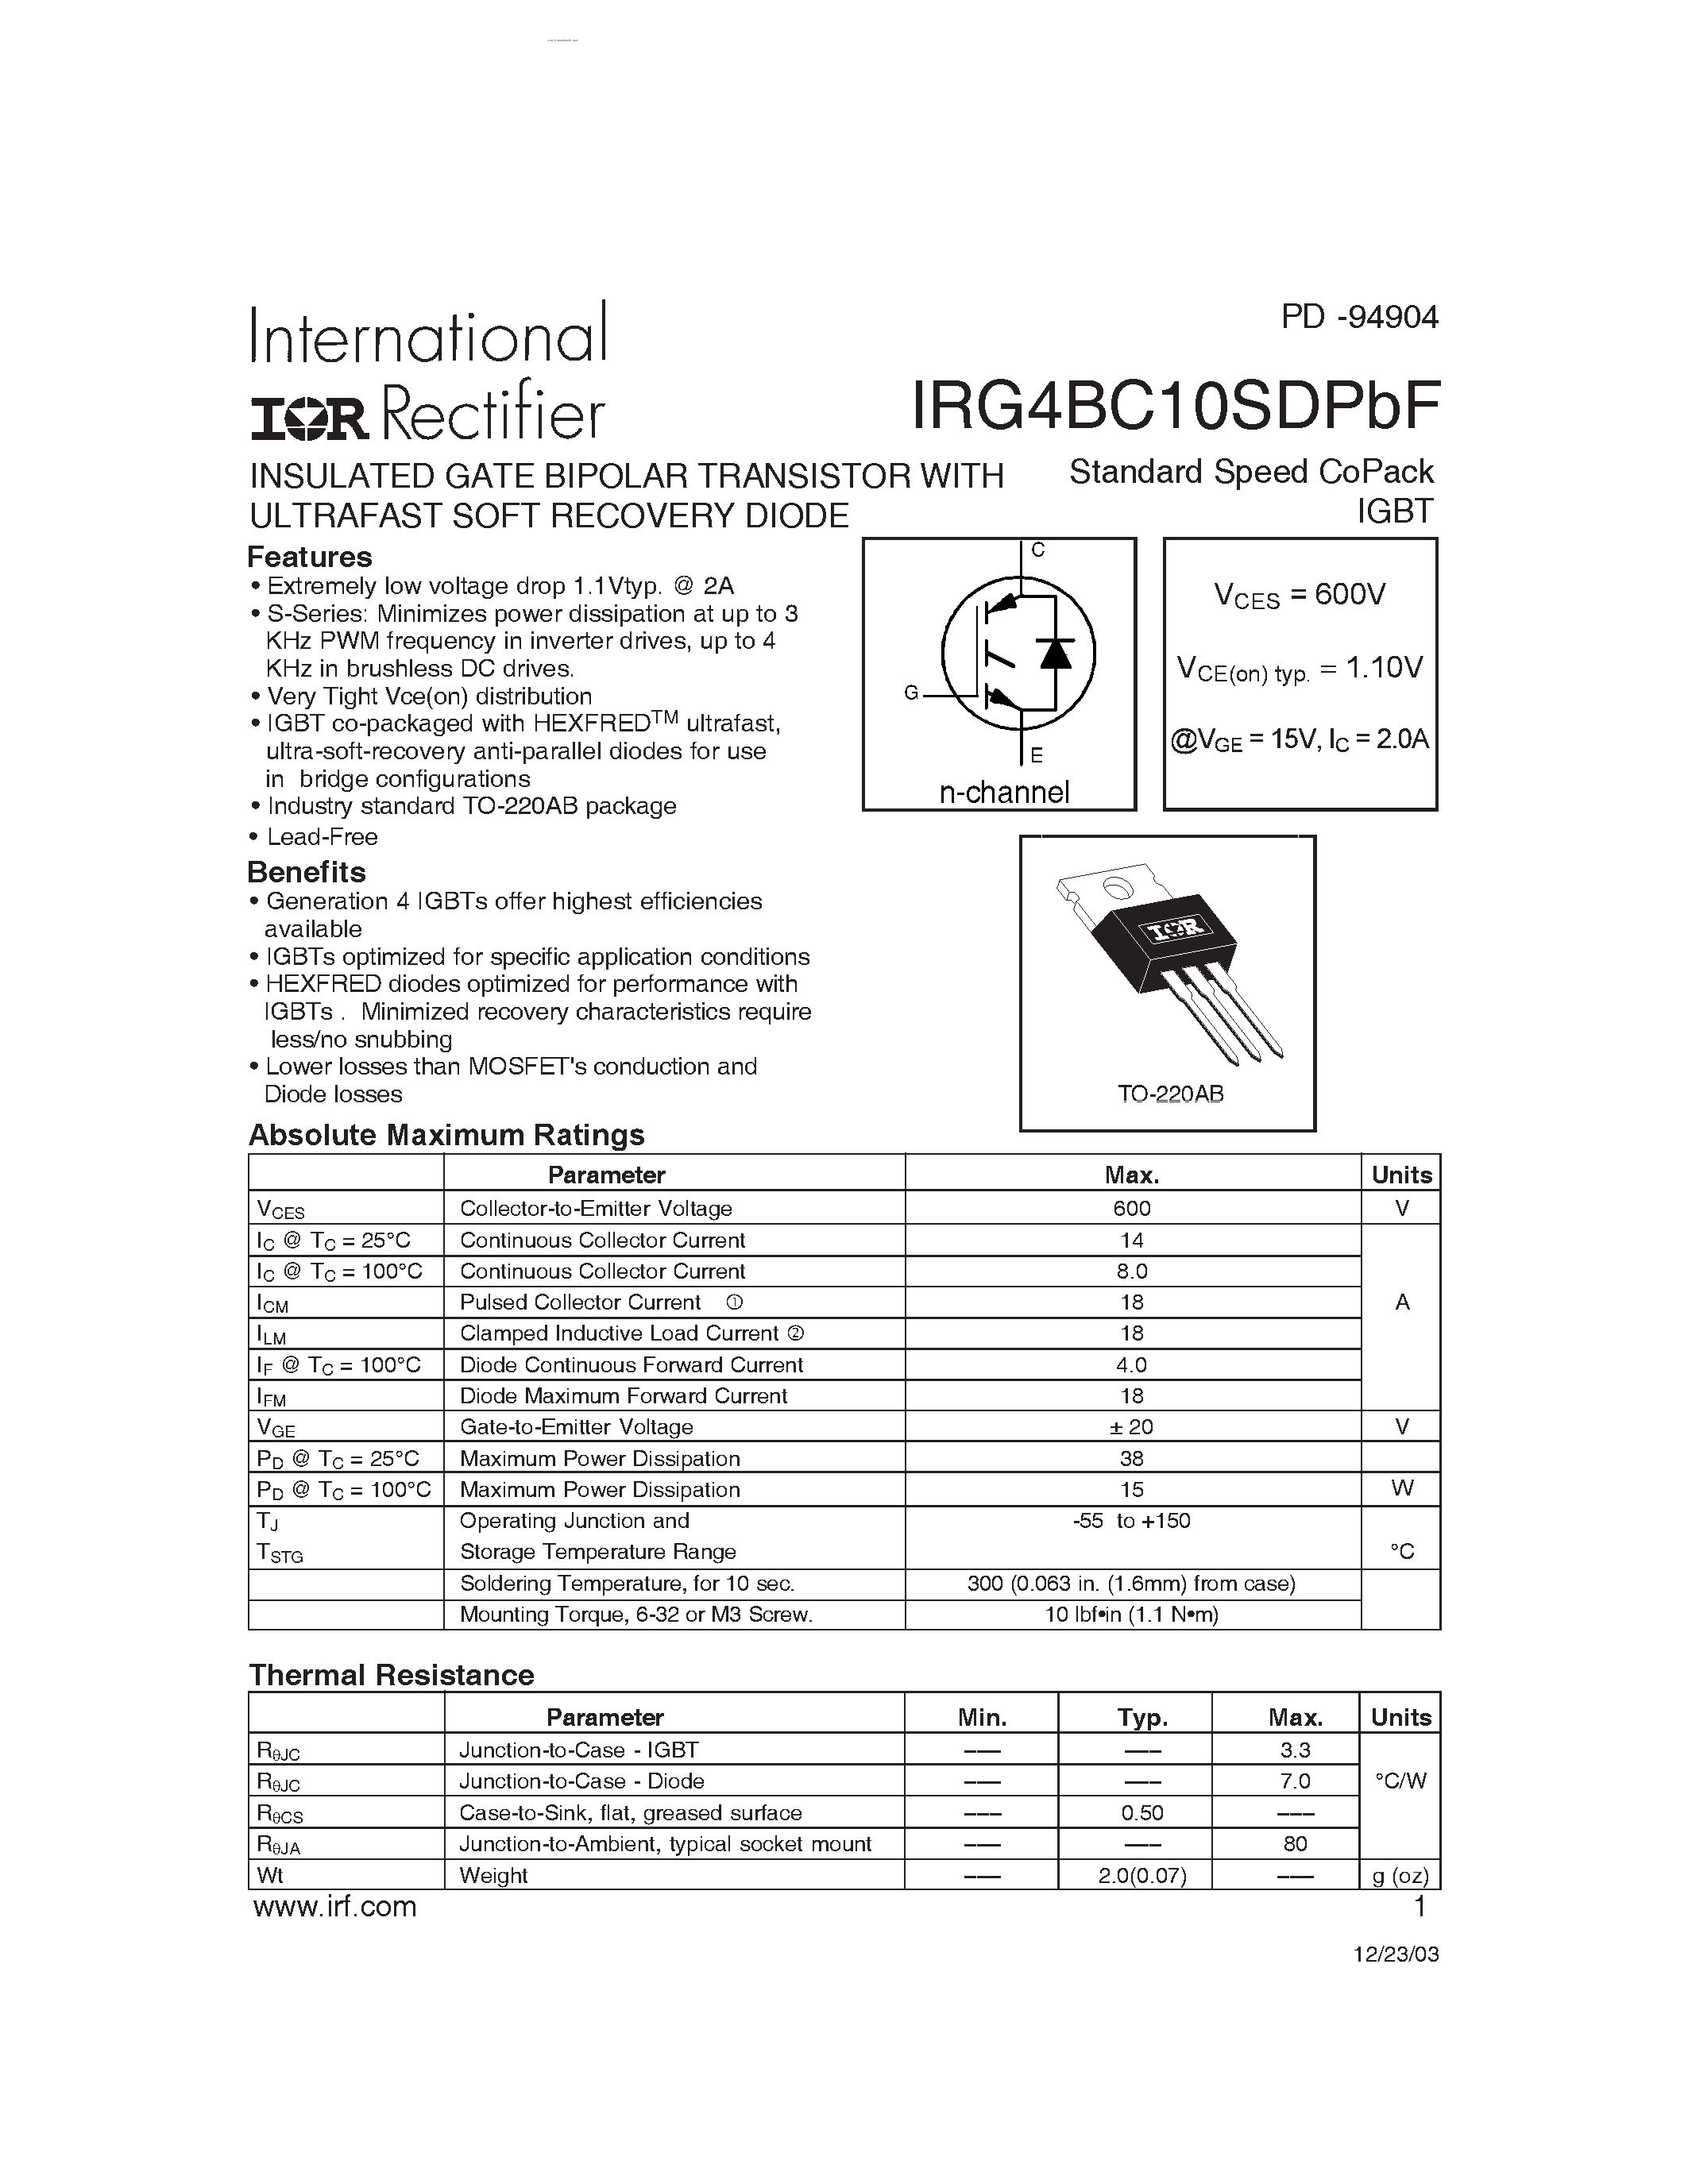 Даташит IRG4BC10SDPBF - INSULATED GATE BIPOLAR TRANSISTOR страница 1